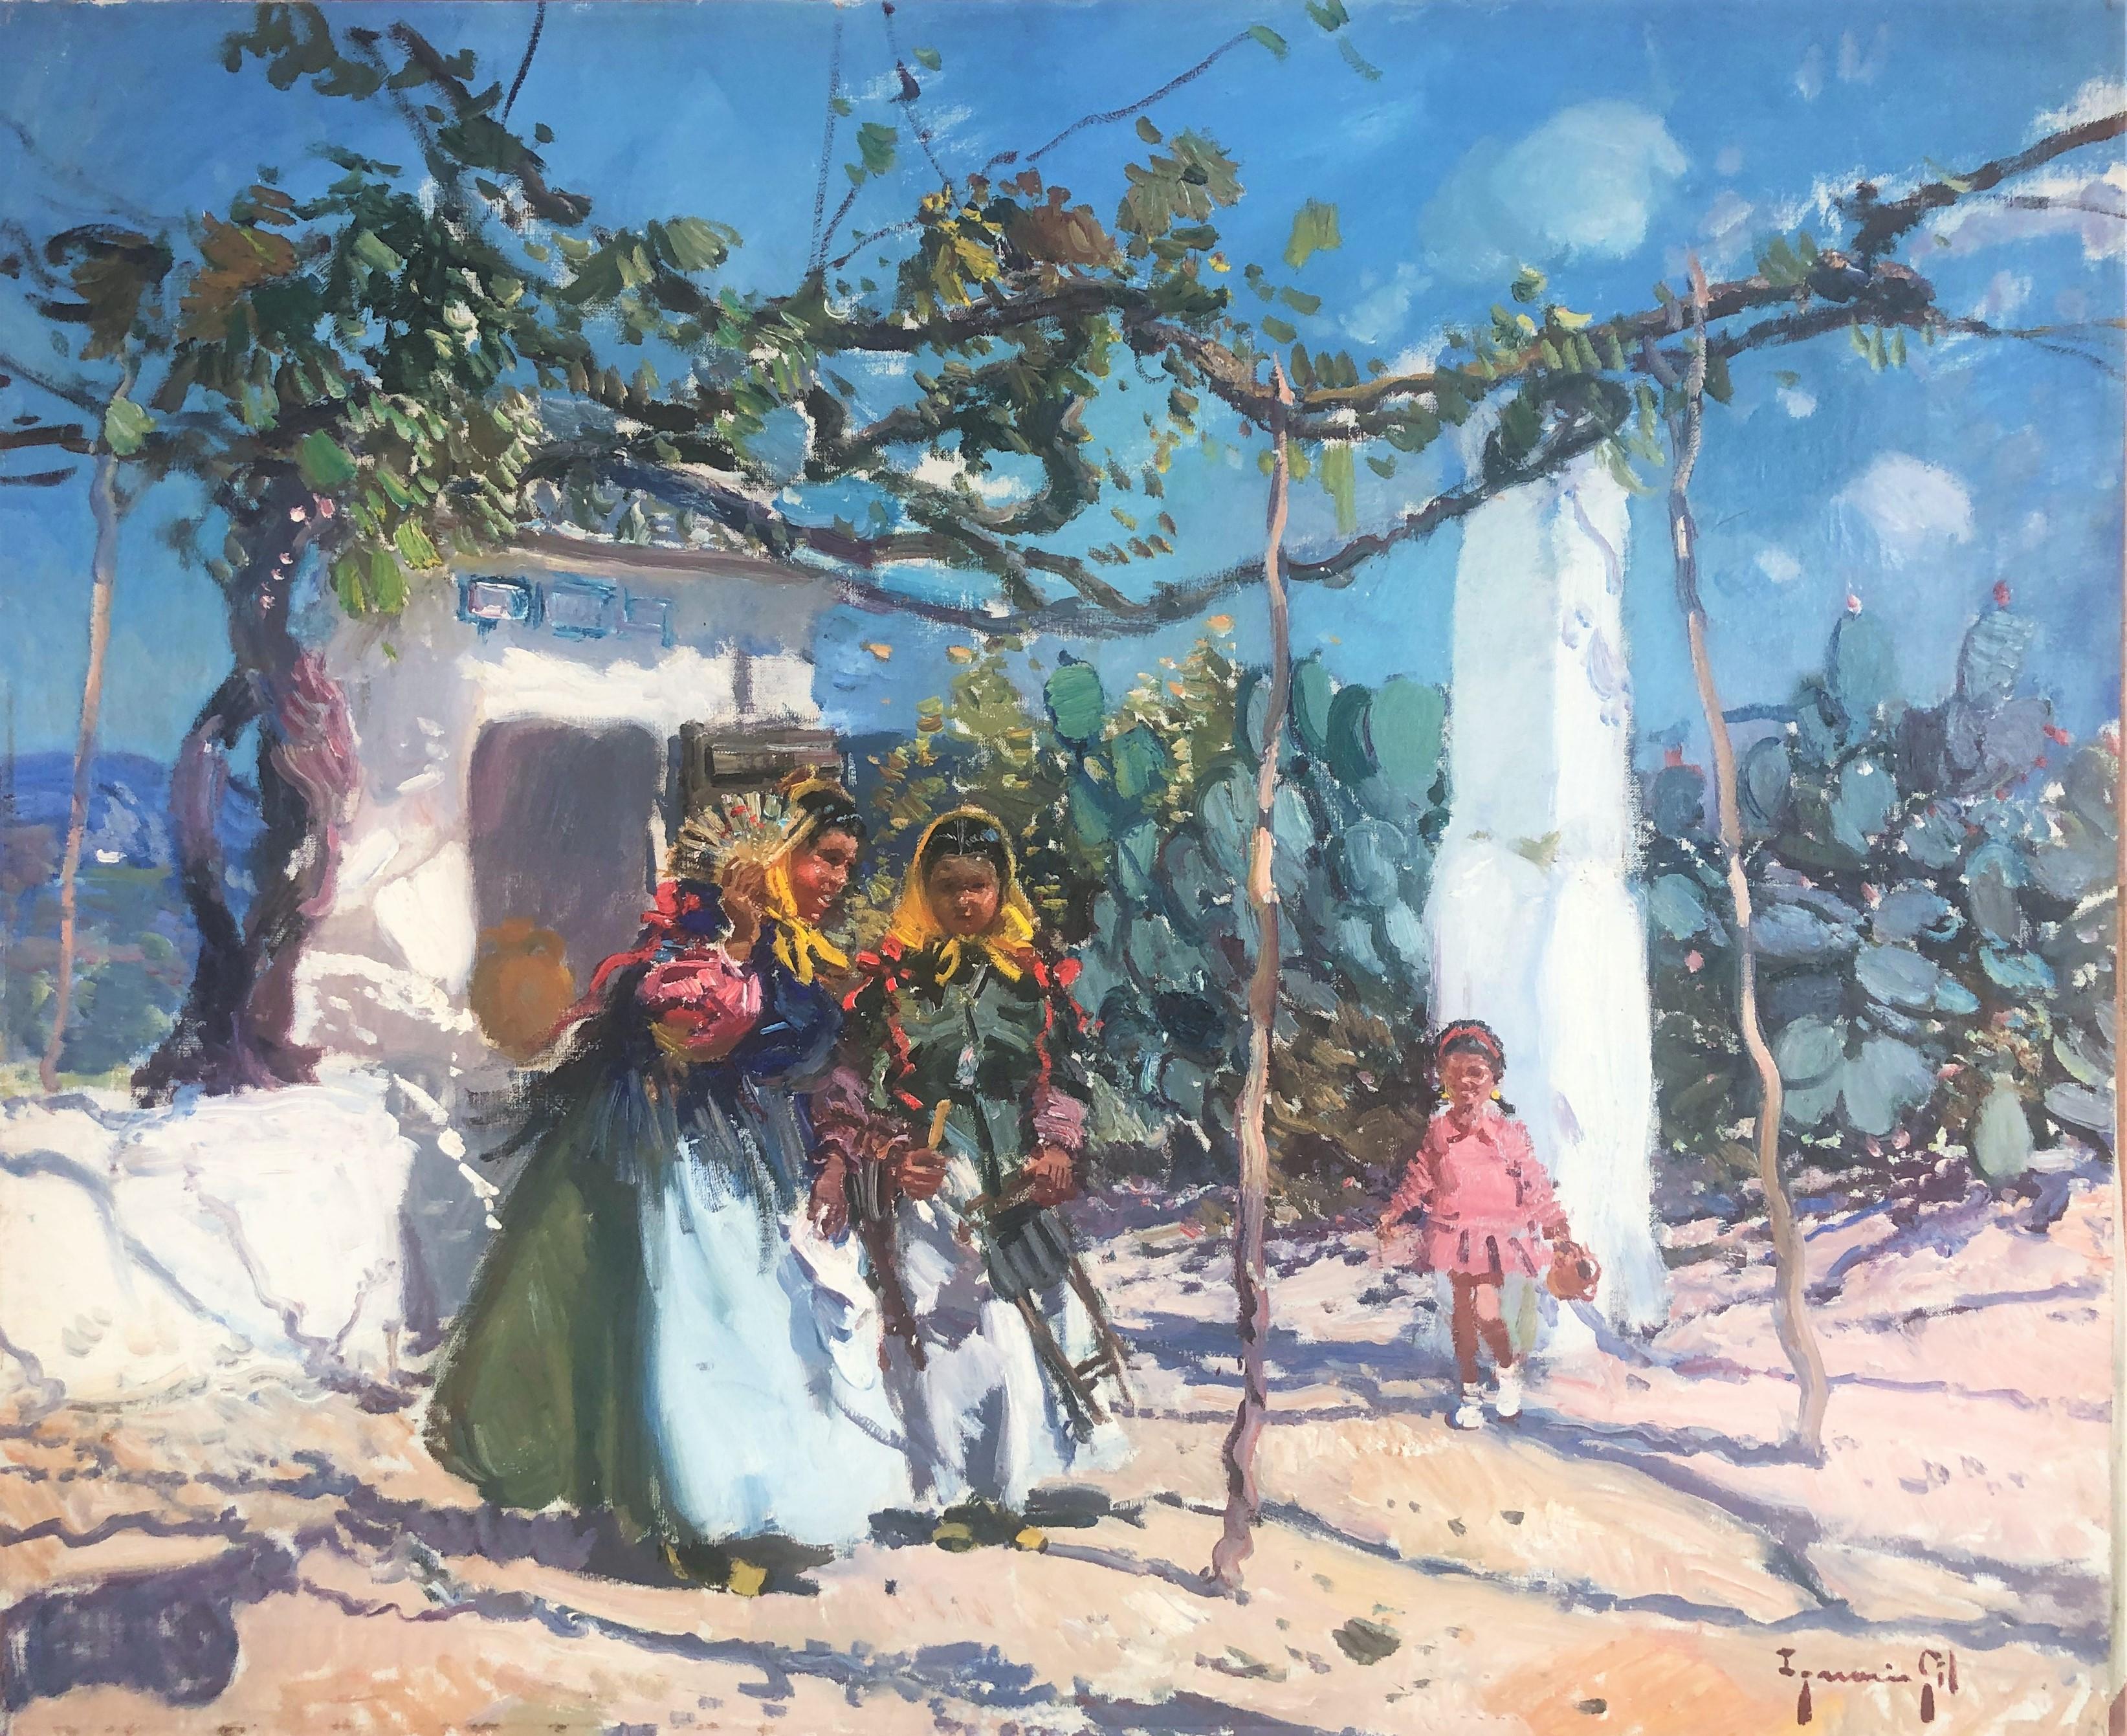 Ignacio Gil Sala Portrait Painting - Ibiza scene Spain oil on canvas painting landscape